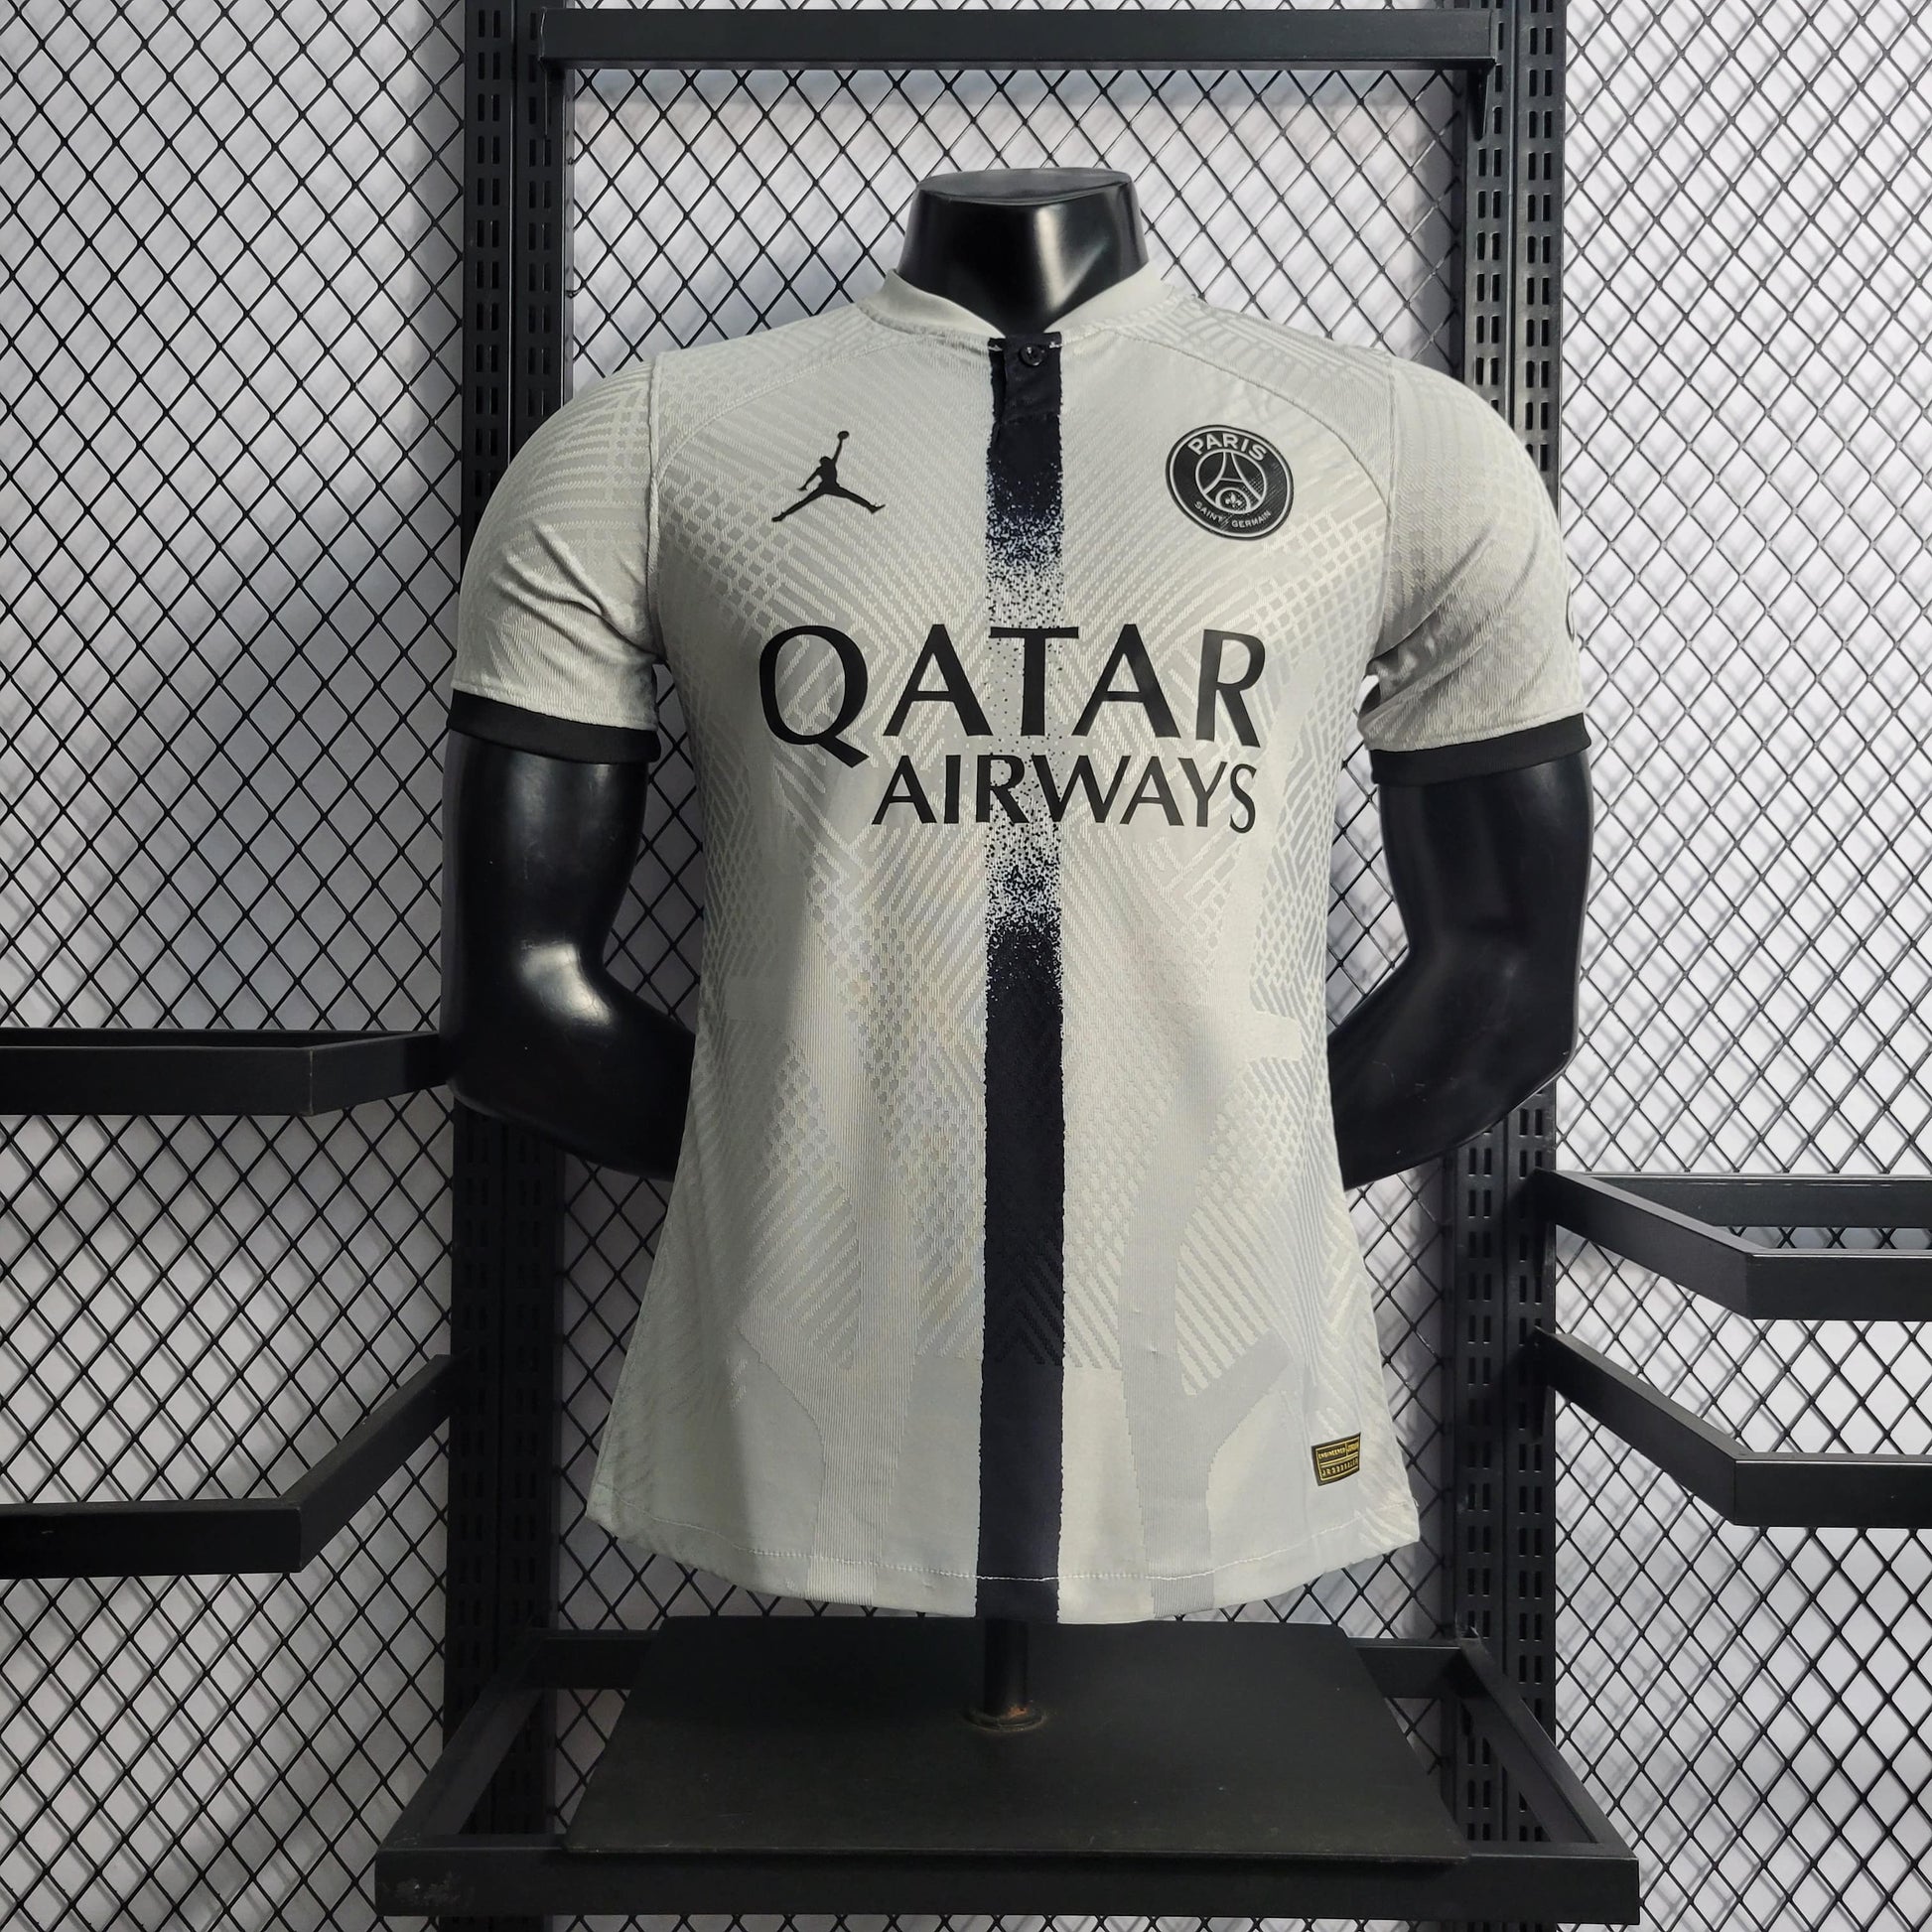 00/01 PSG Away Gray Retro Soccer Jerseys Shirt - Cheap Soccer Jerseys Shop